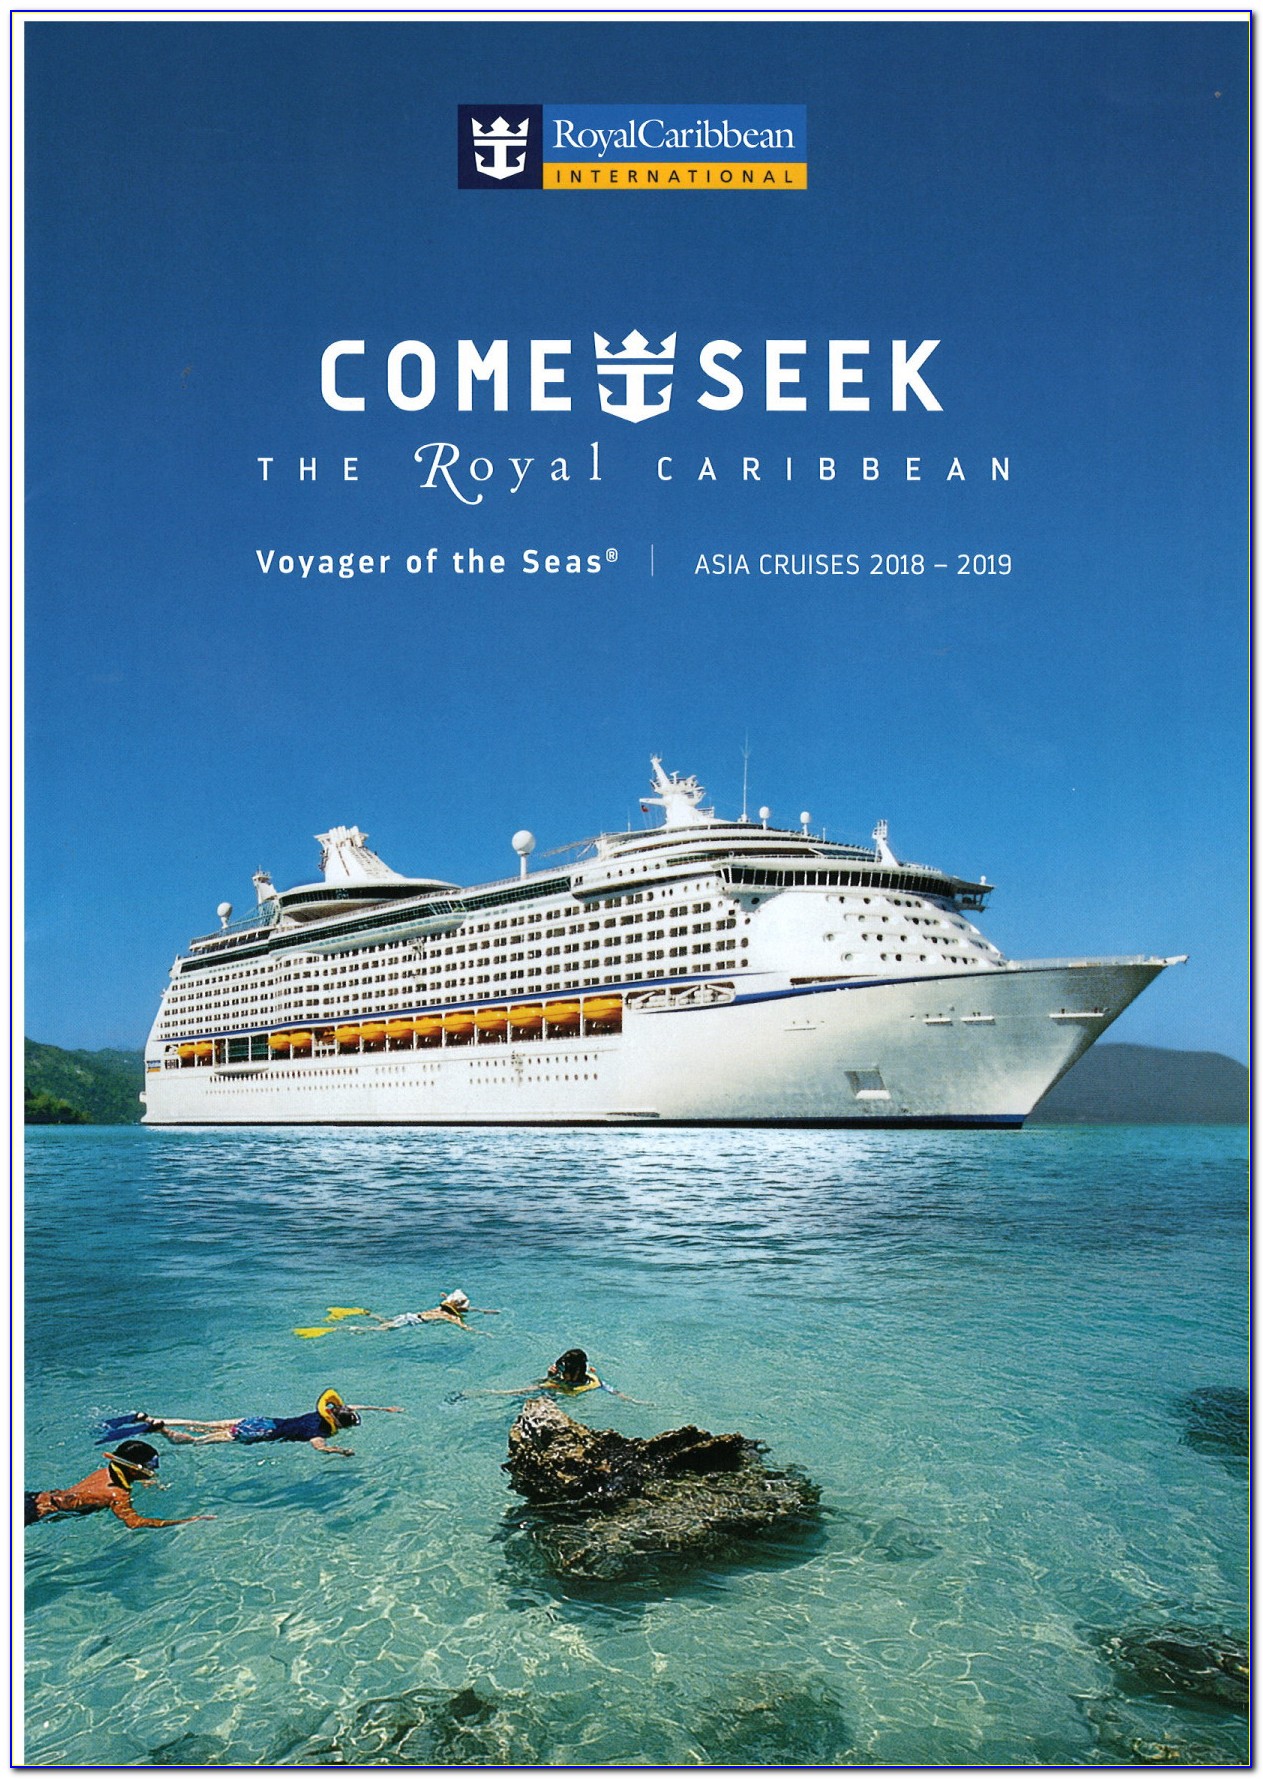 Royal Caribbean Brochure Request